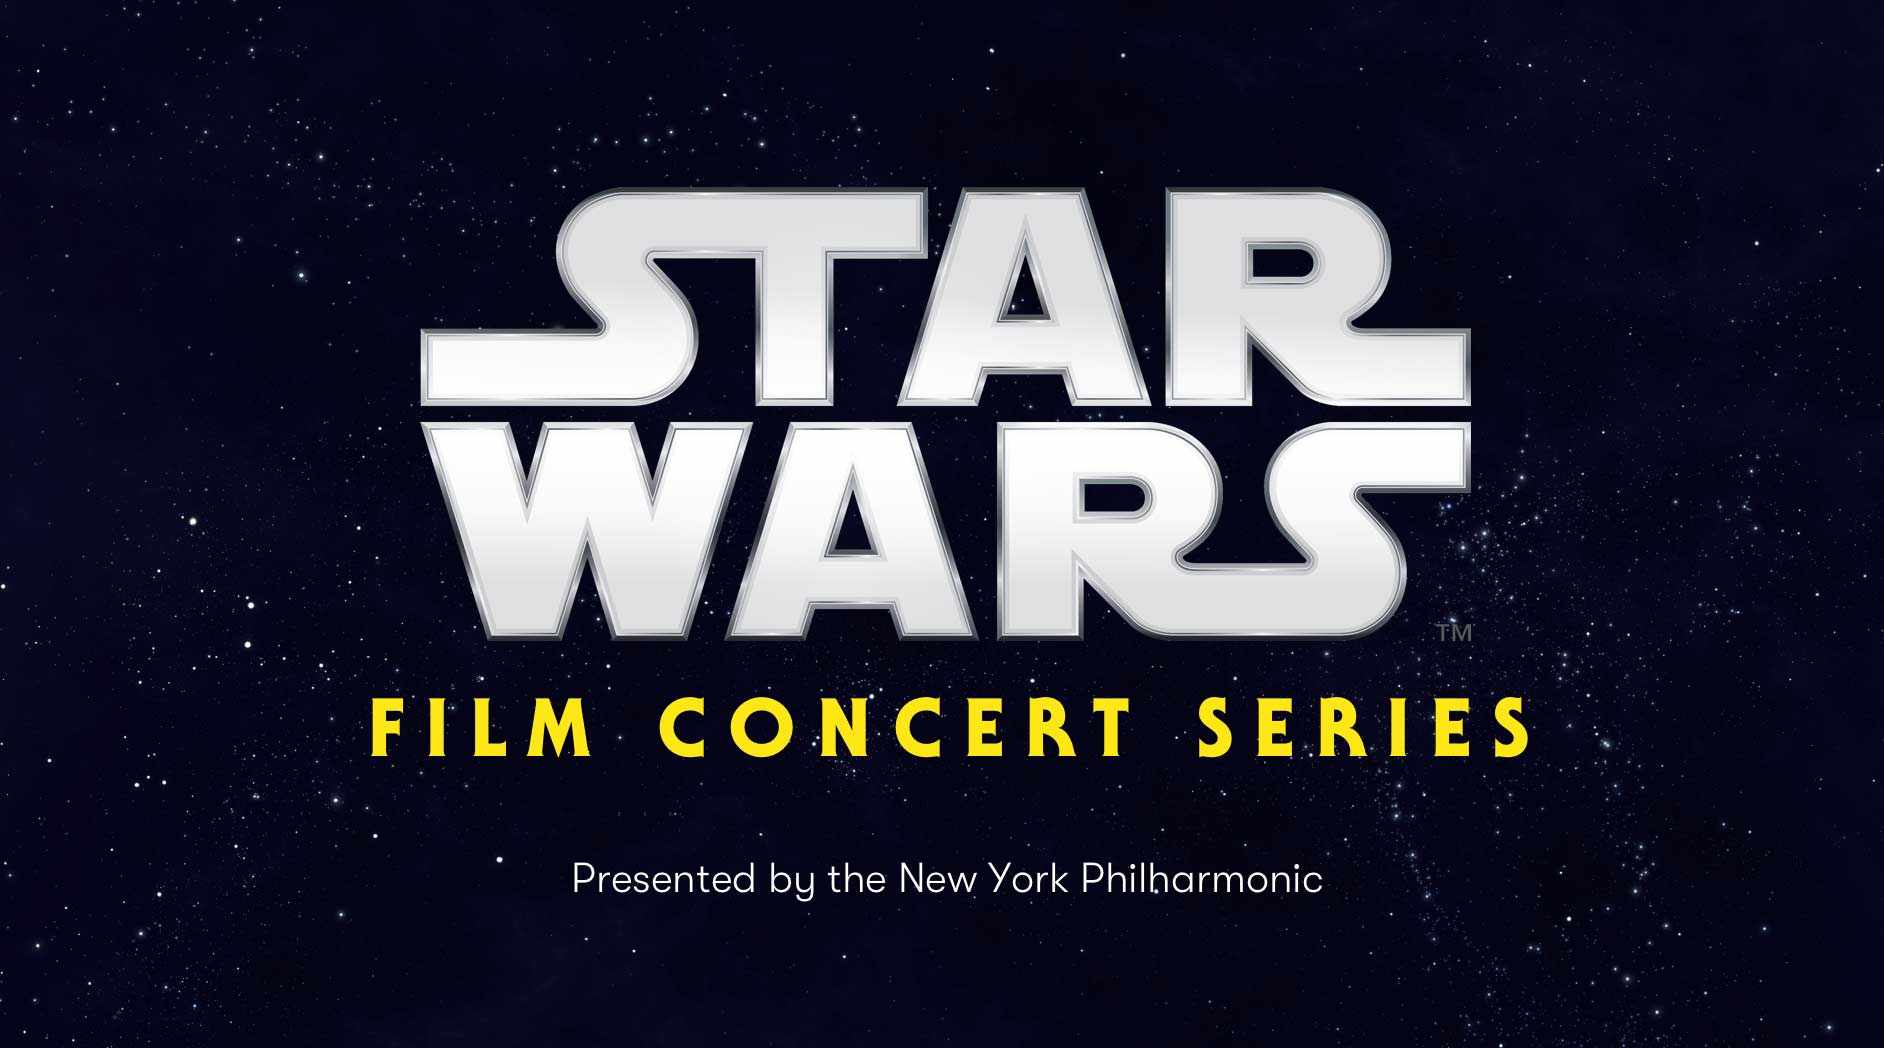 Star Wars Film Concert series new york